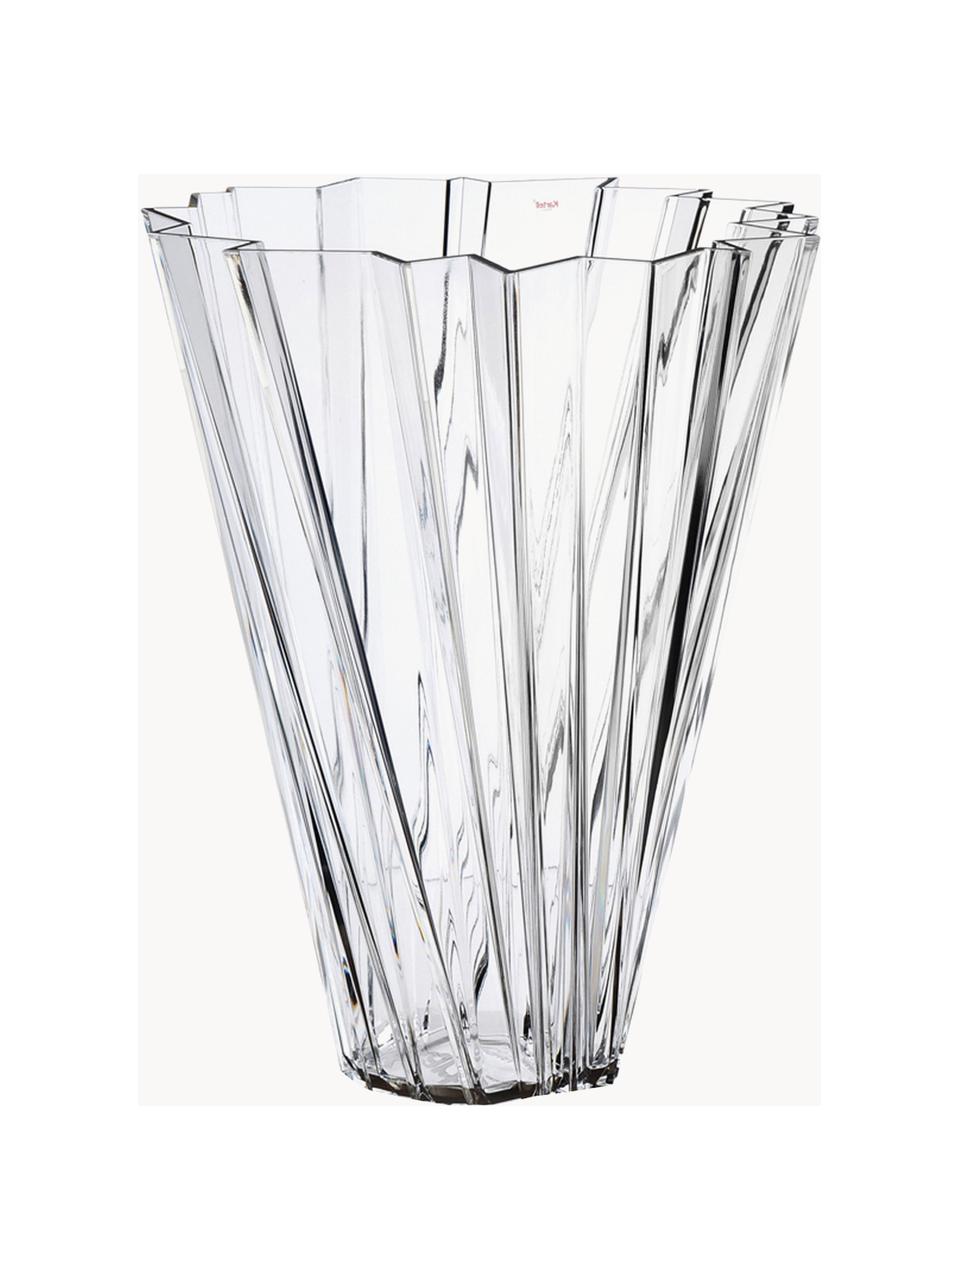 Grote vaas Shanghai, Acrylglas, Transparant, Ø 35 x H 44 cm